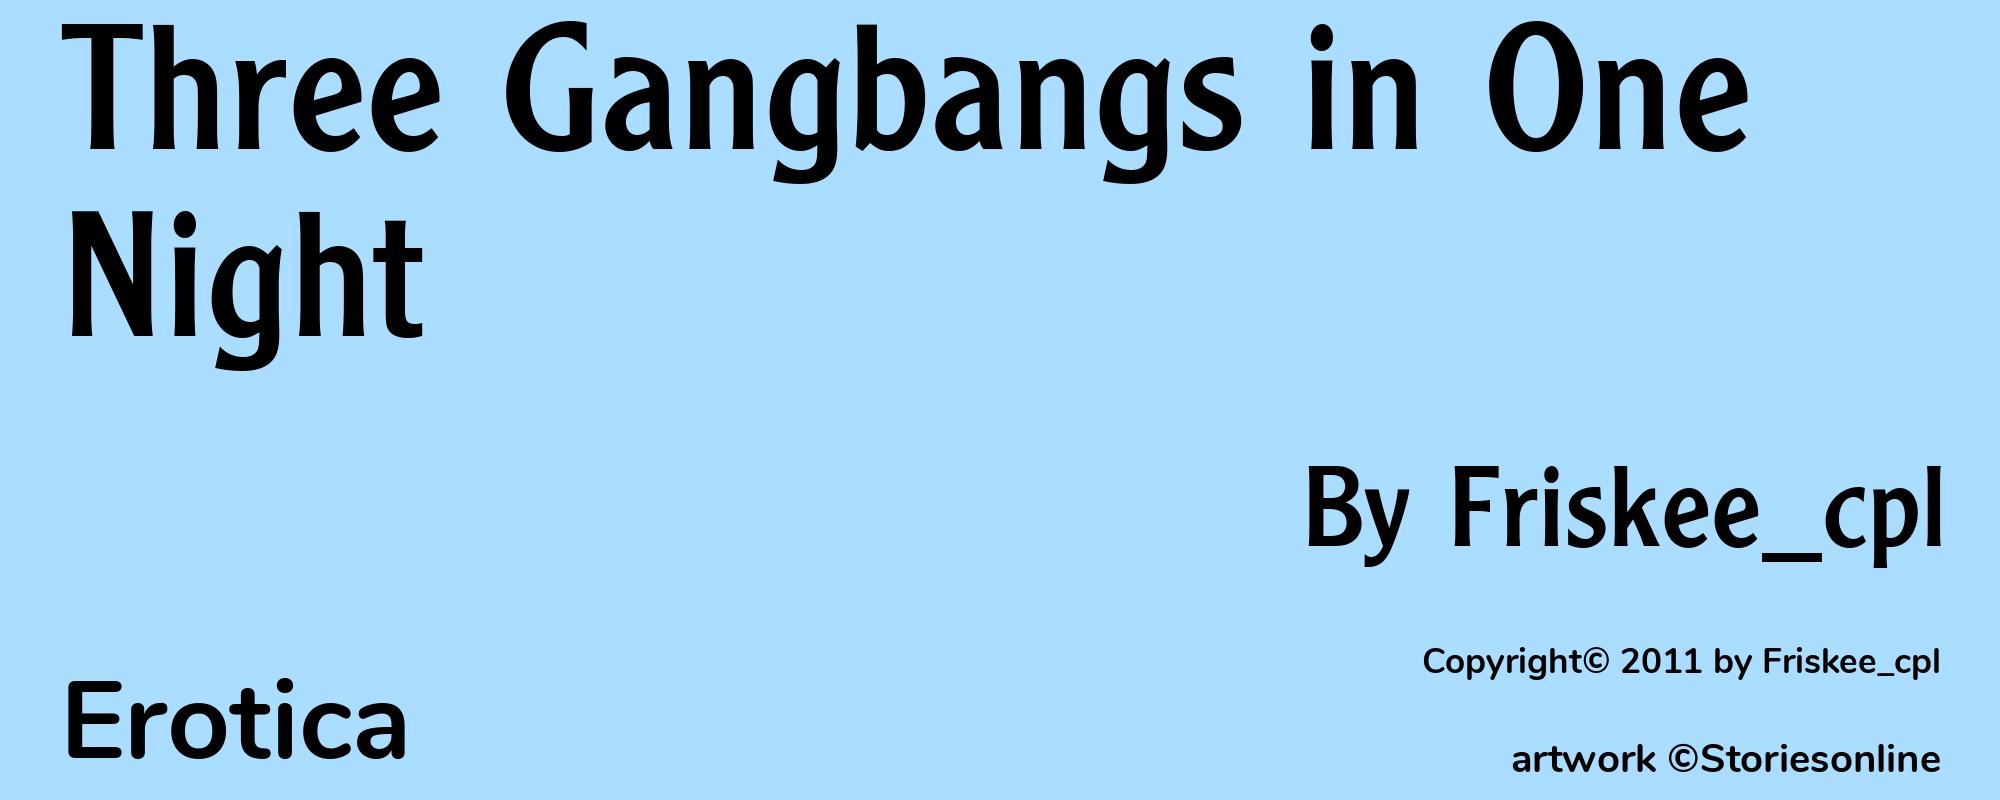 Three Gangbangs in One Night - Cover